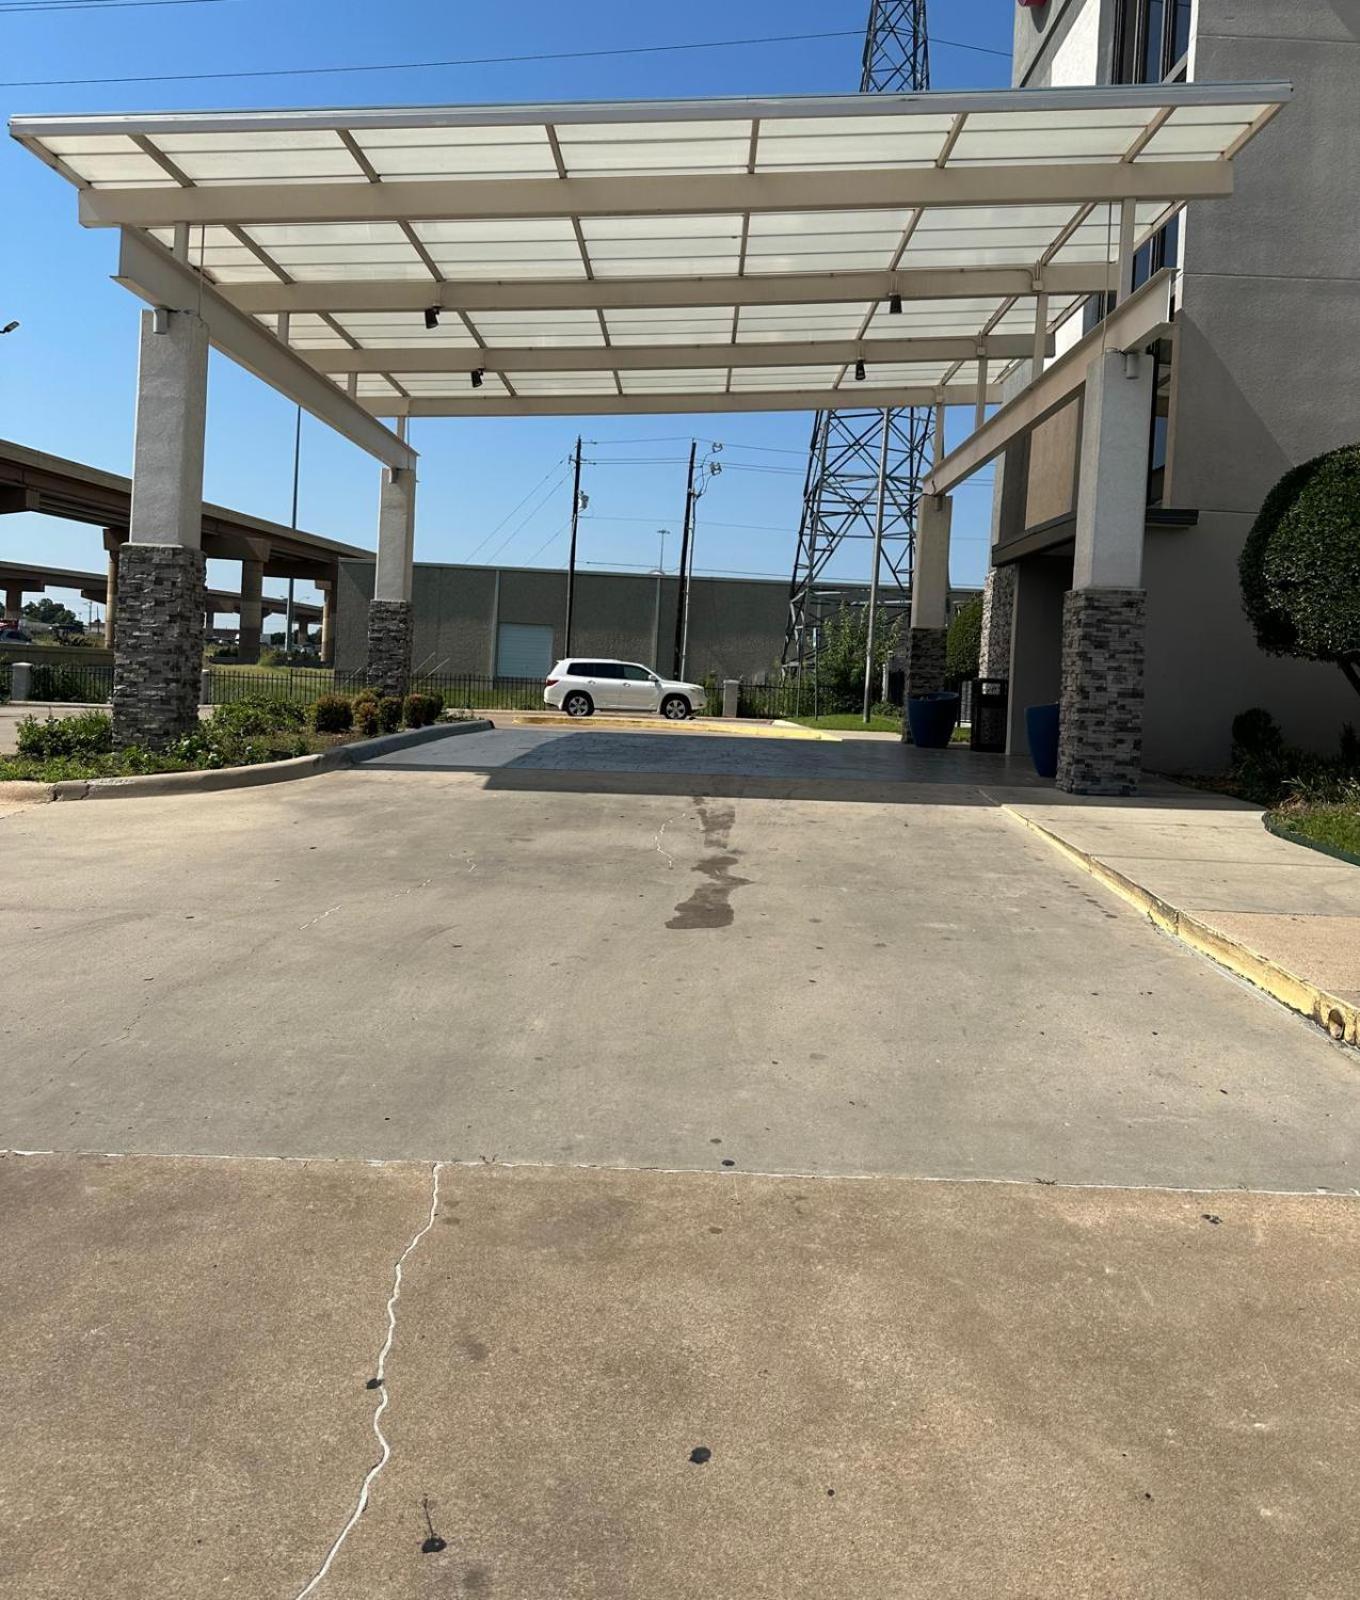 Comfort Inn Dallas North Love Field Airport Exterior photo